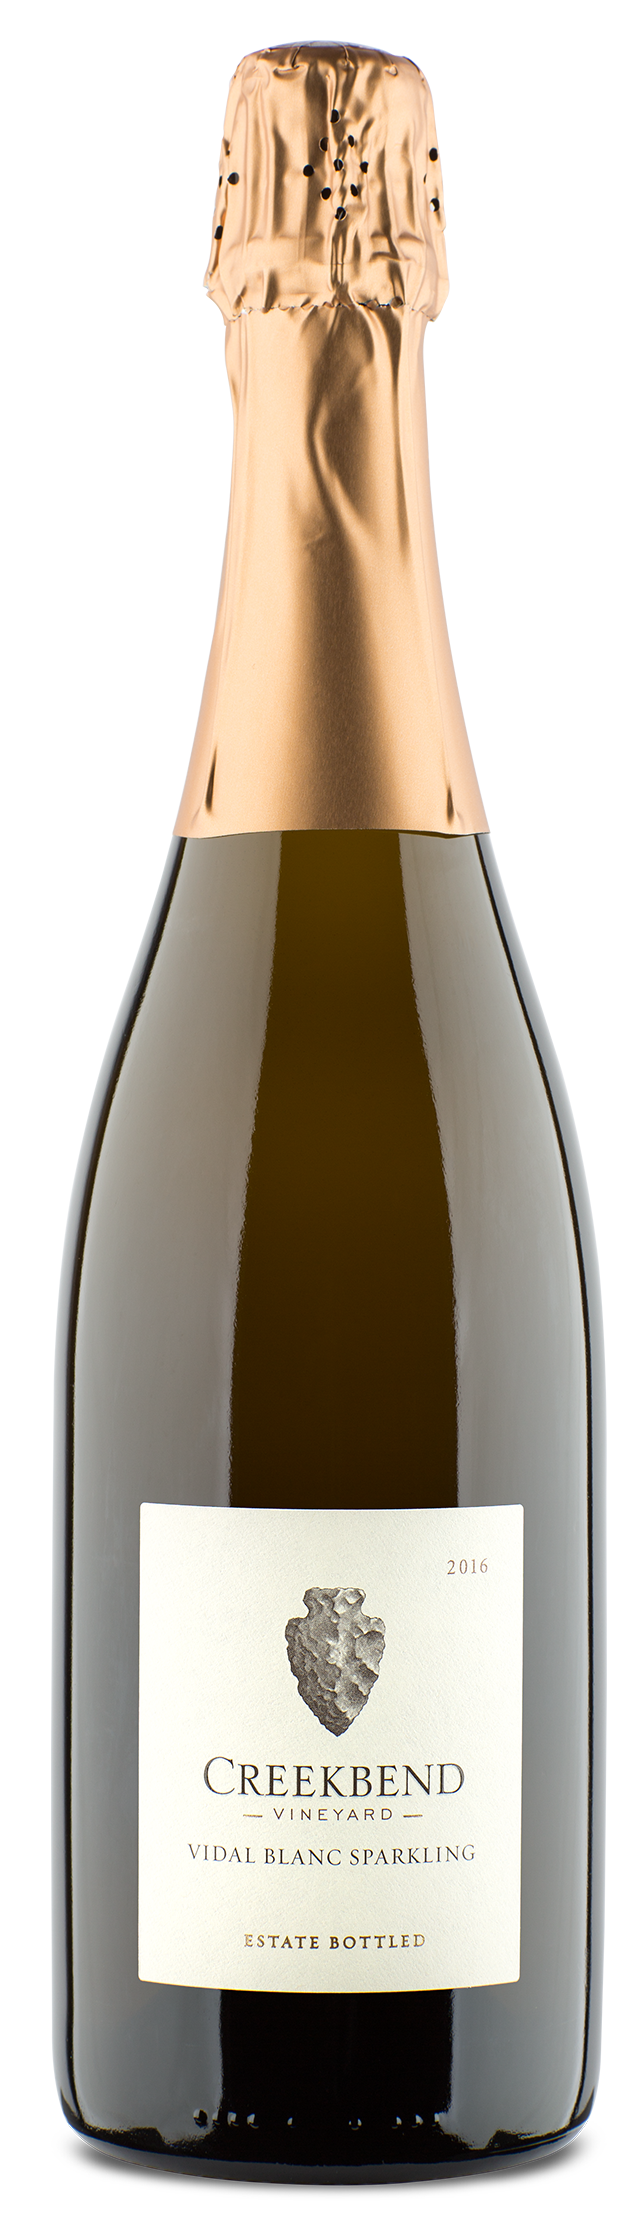 Creekbend Vidal Blanc Sparkling Wine